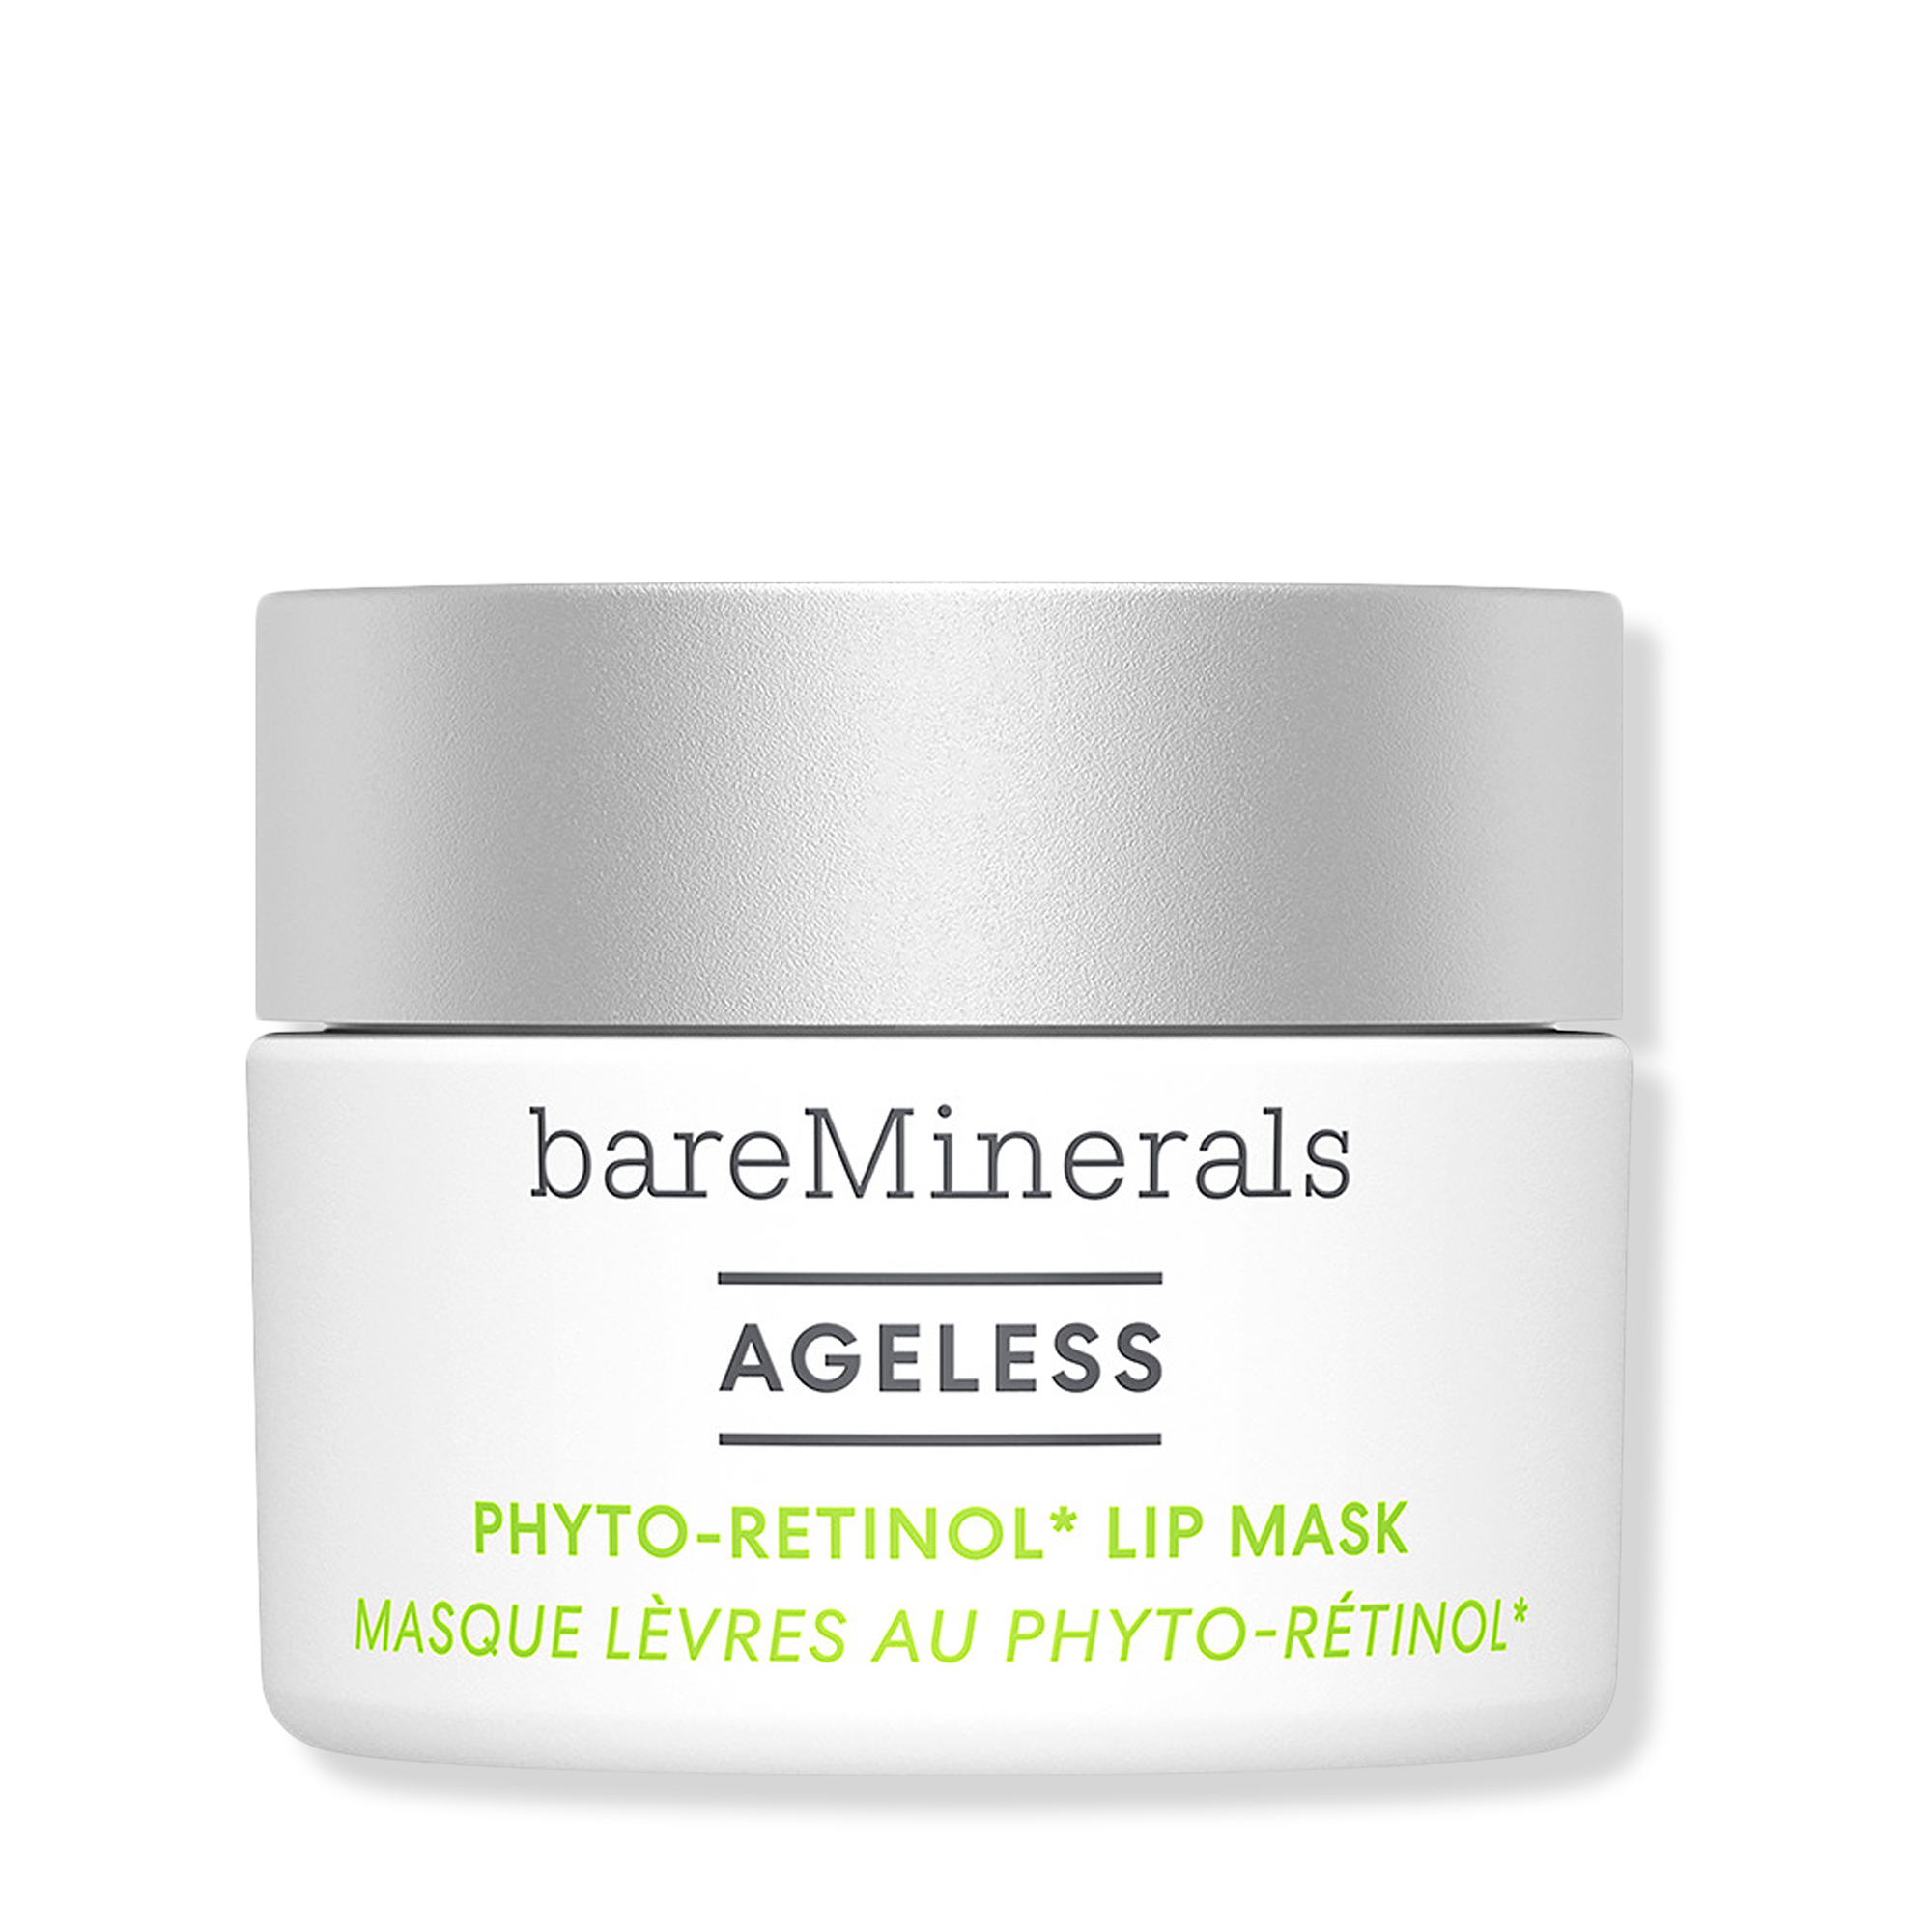 bareMinerals Ageless Phyto-Retinol Lip Mask / 0.46oz